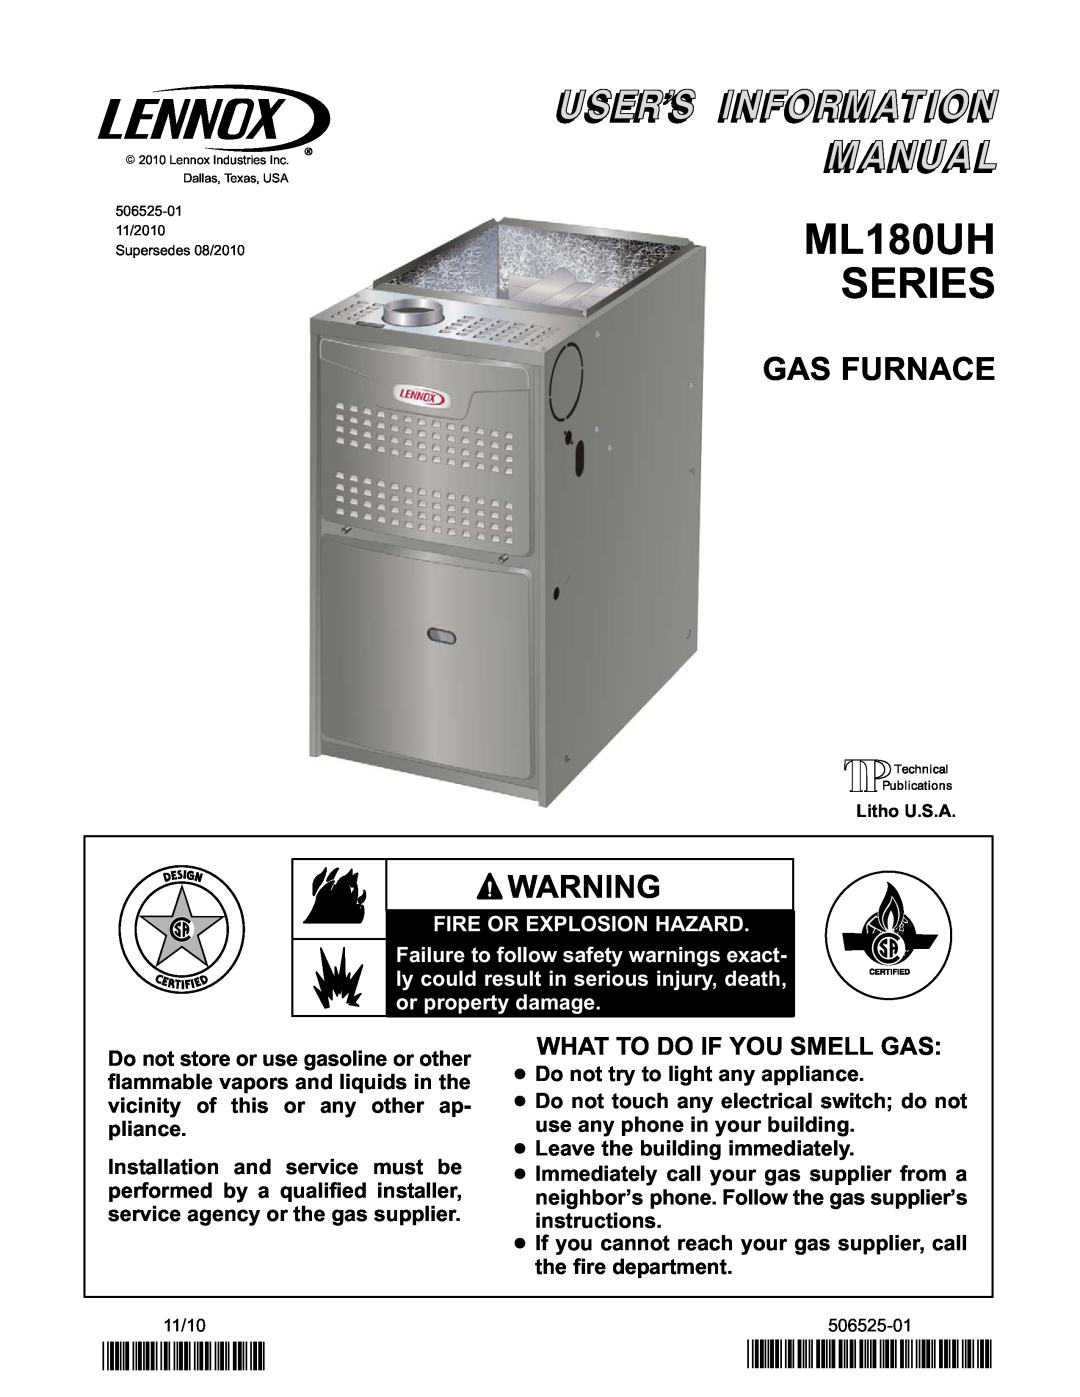 Lennox International Inc LENOX GAS FURNACE manual Gas Furnace, ML180UH SERIES, 2P1110, P506525-01 